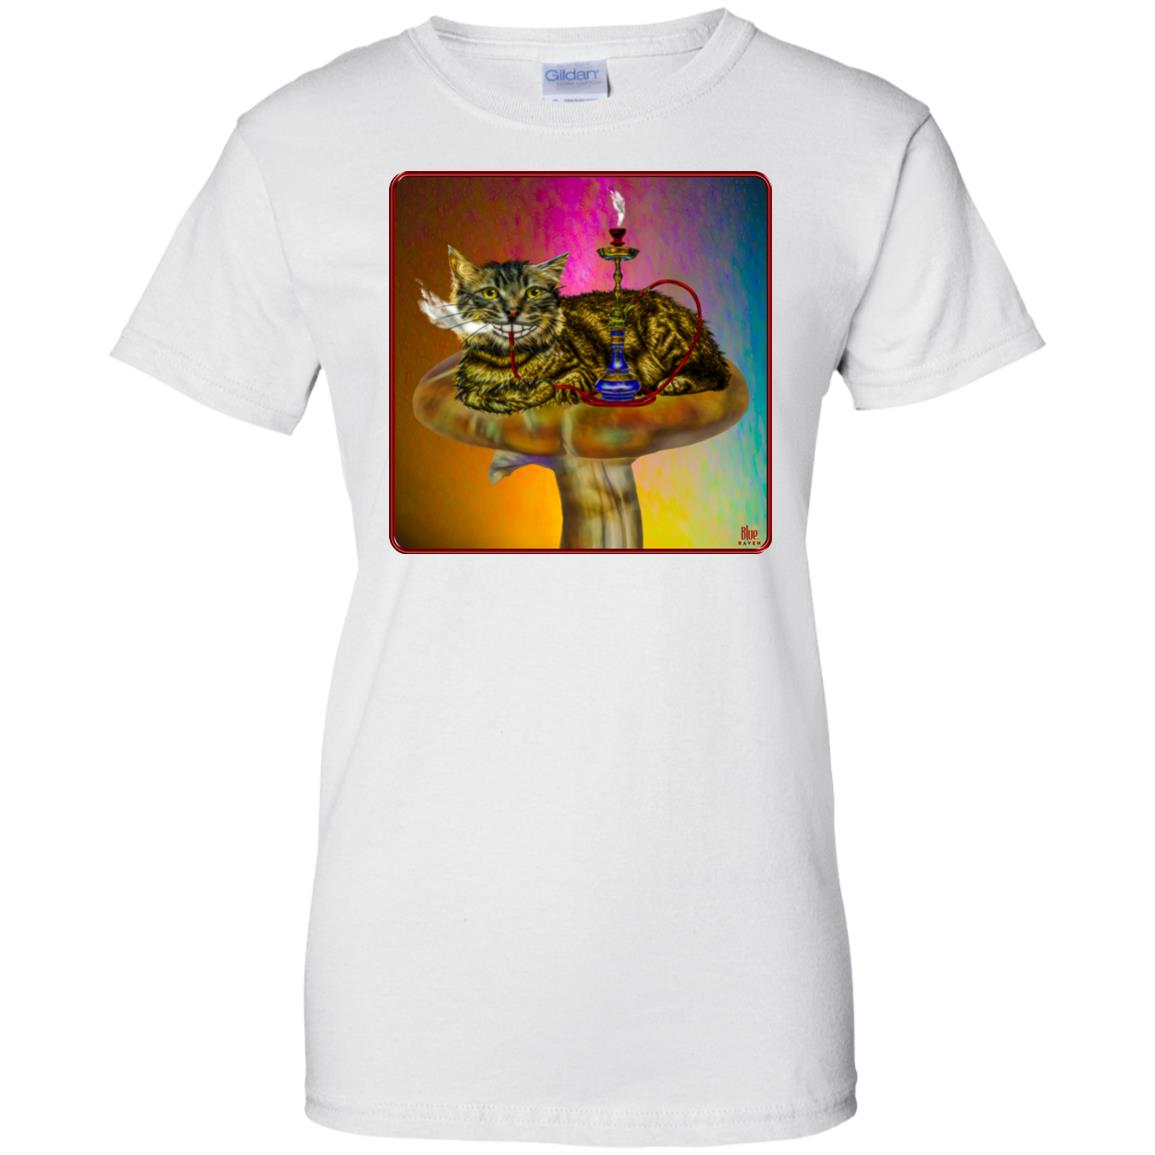 MAGIC MUSHROOM - Women's Relaxed Fit T-Shirt